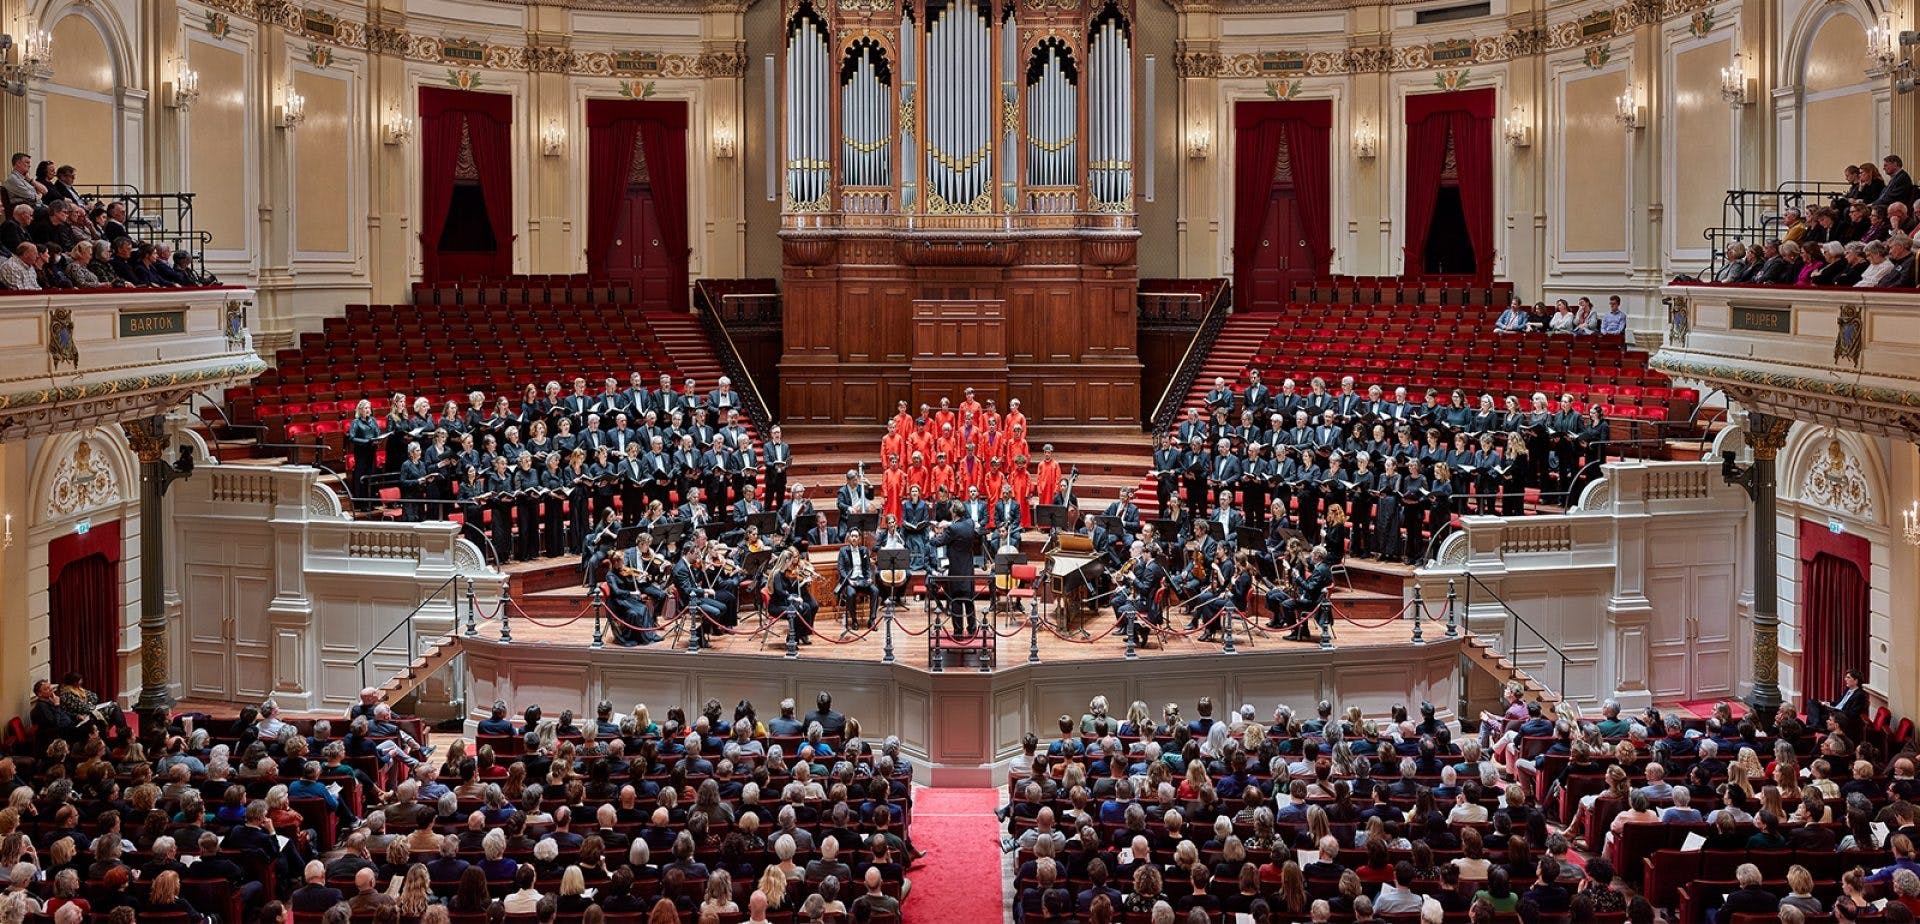 Toonkunstkoor Amsterdam sings Bach's St Matthew Passion